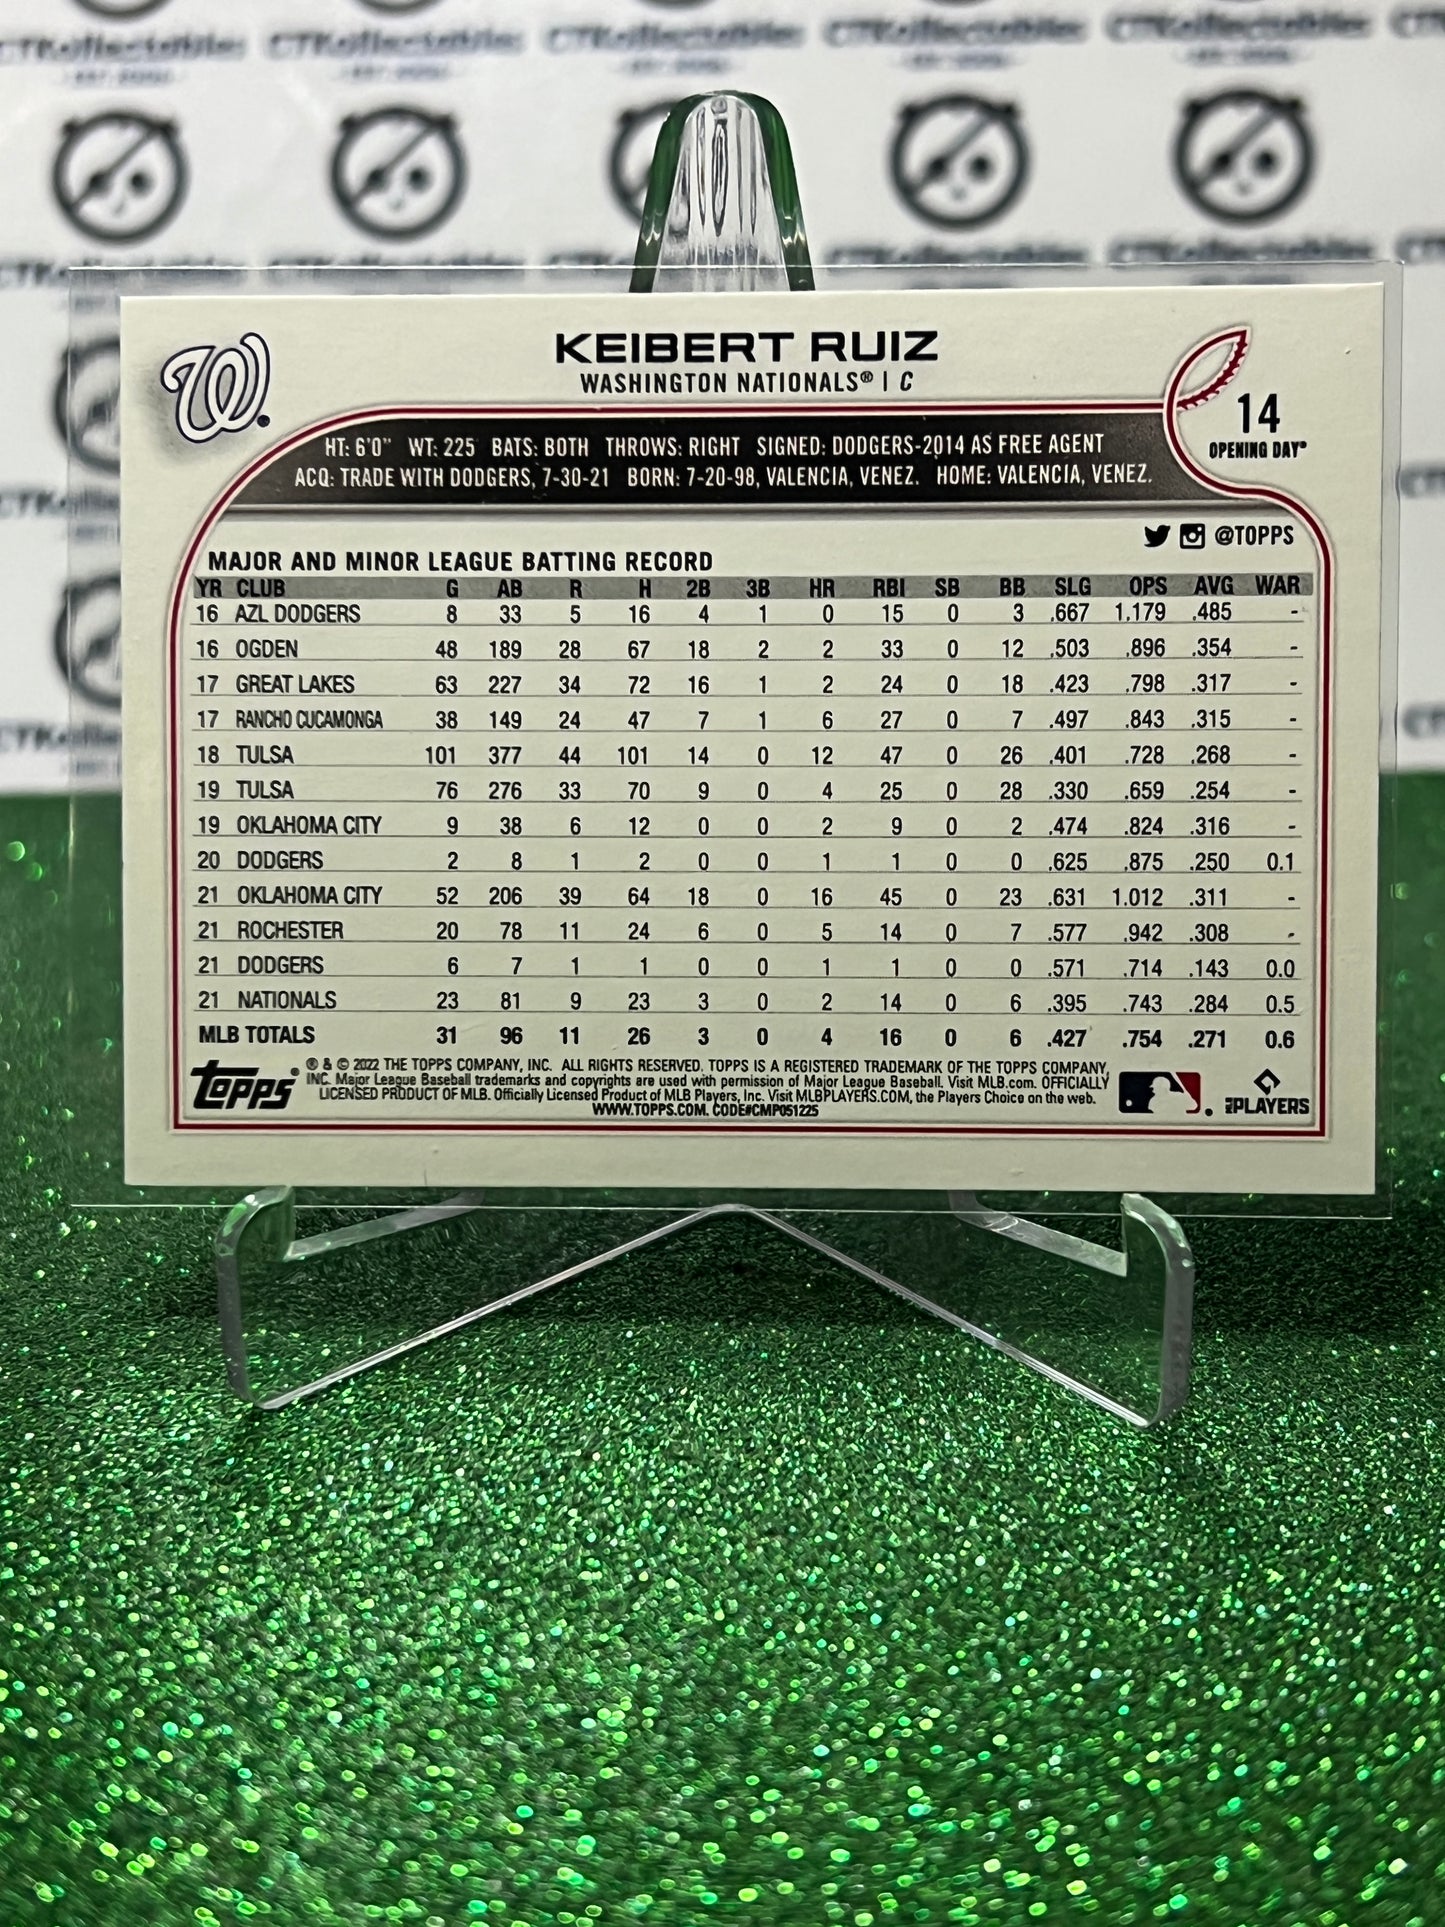 2022 TOPPS OPENING DAY KEIBERT RUIZ # 14 FUTURE STARS WASHINGTON NATIONALS BASEBALL CARD